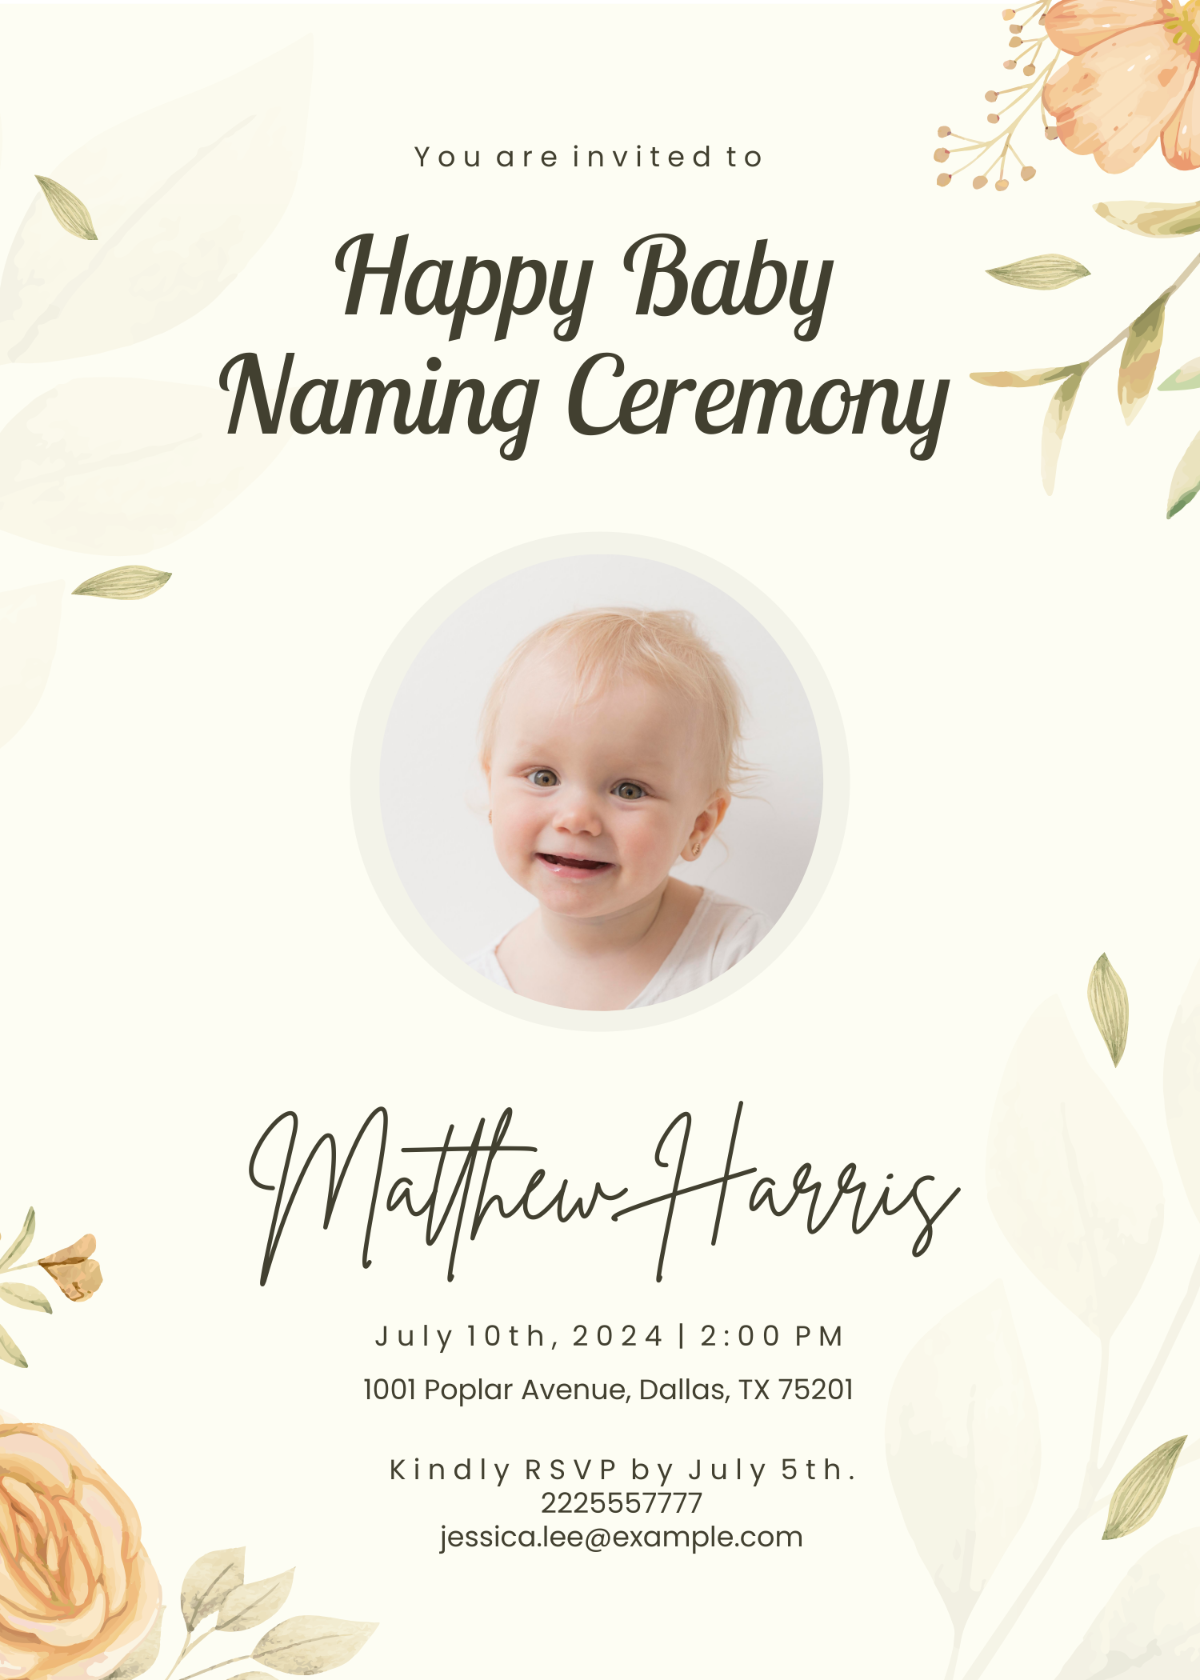 Happy Baby Naming Ceremony Invitation